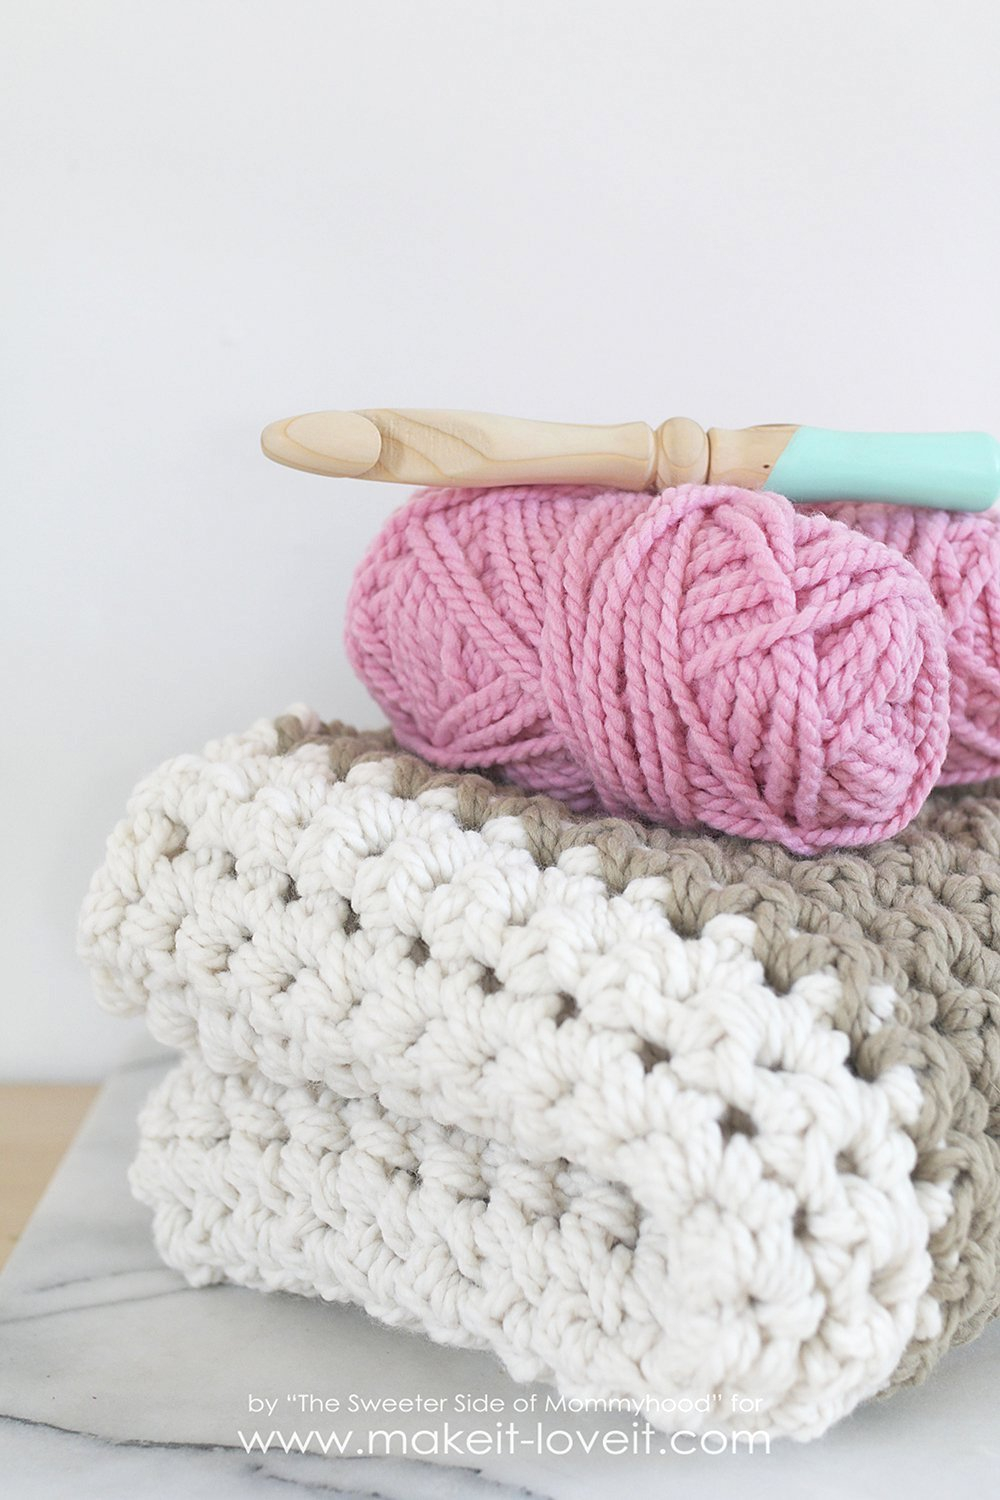 Crochet Blanket Pattern For Beginners How To Crochet A Chunky Blanket An Affordable Beginner Project